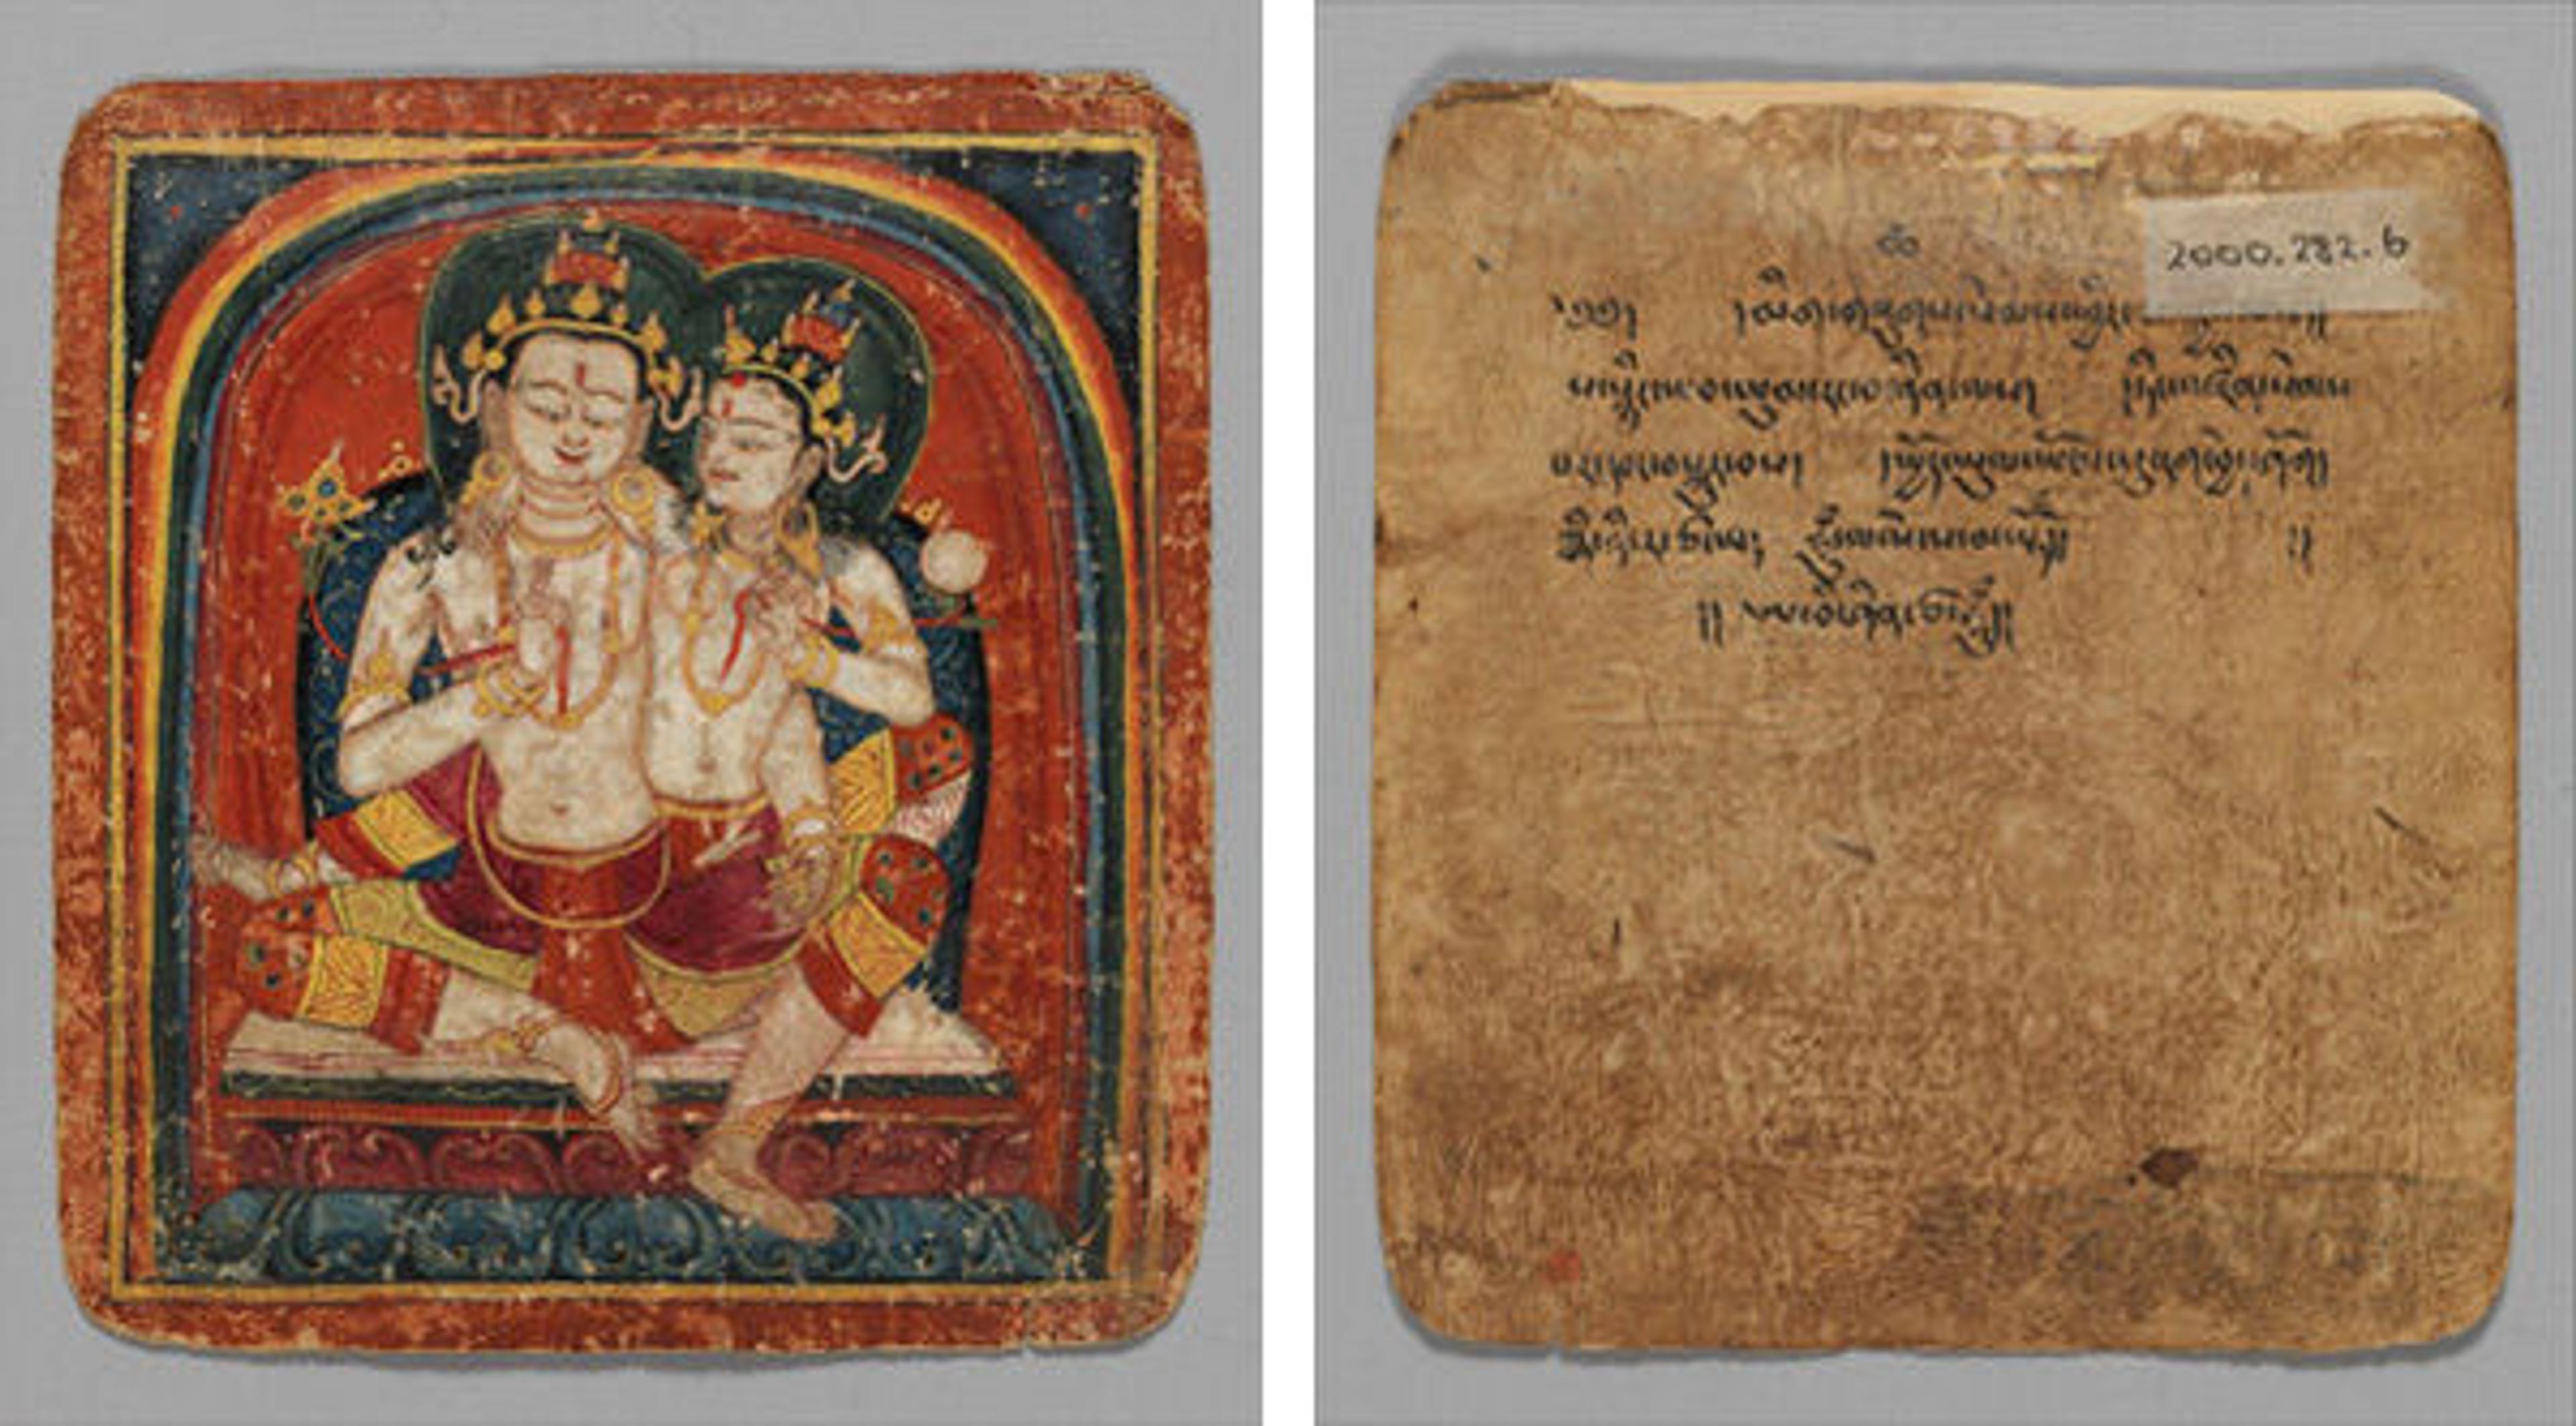 Initiation Card (Tsakalis), early 15th century. Tibet. 2000.282.7